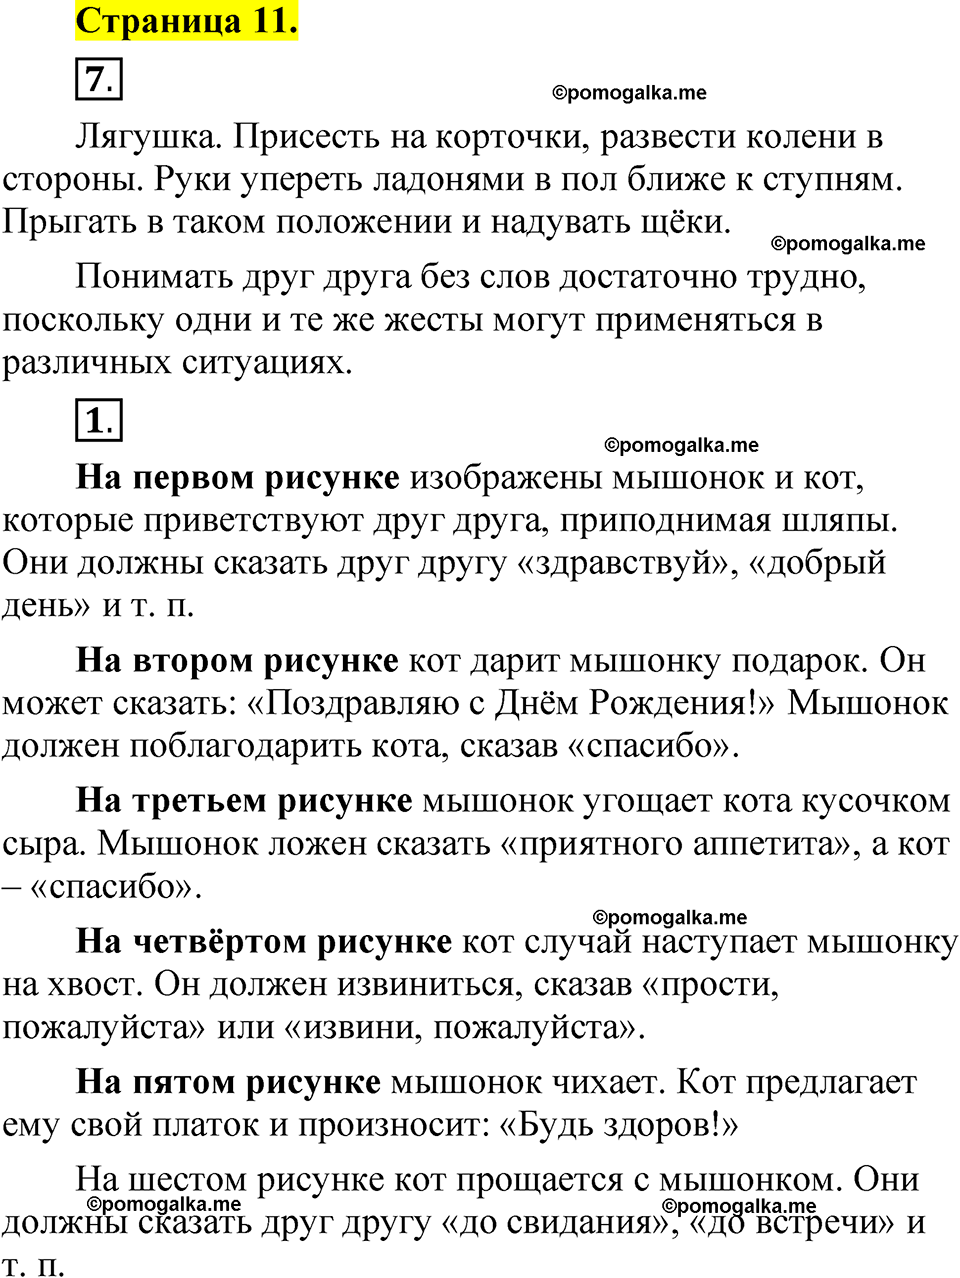 страница 11 русский язык 1 класс Александрова 2023